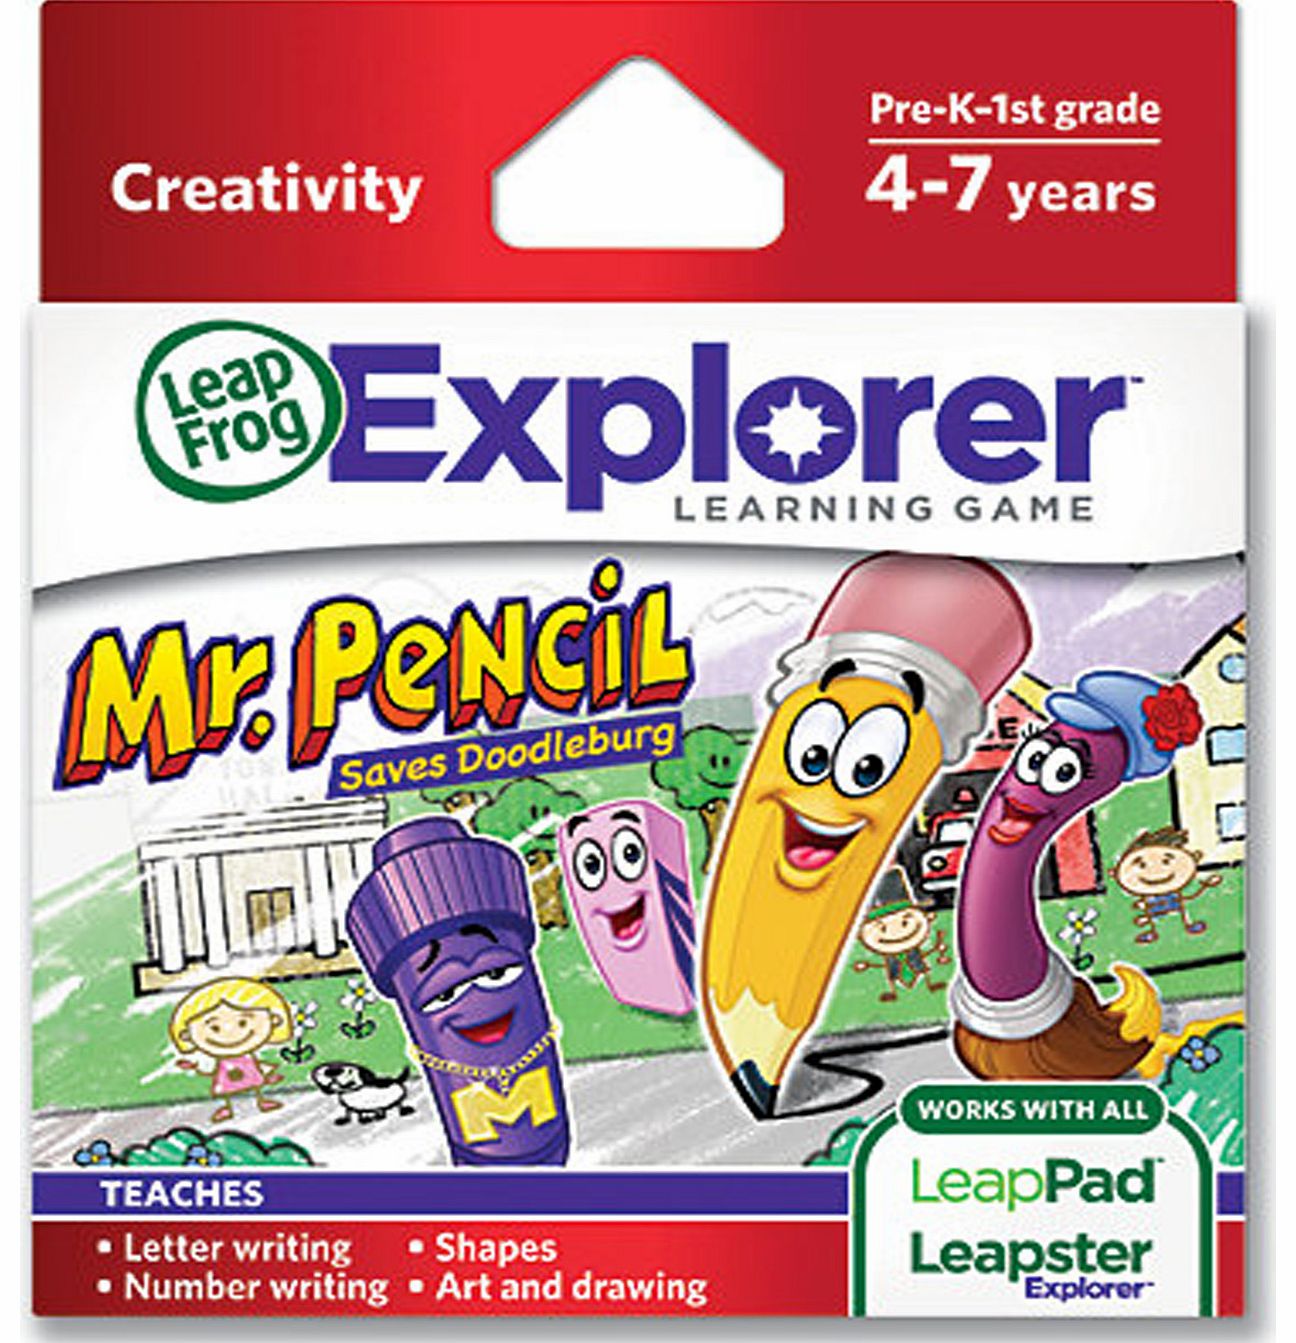 LeapFrog Explorer Learning Game: Mr. Pencil Saves